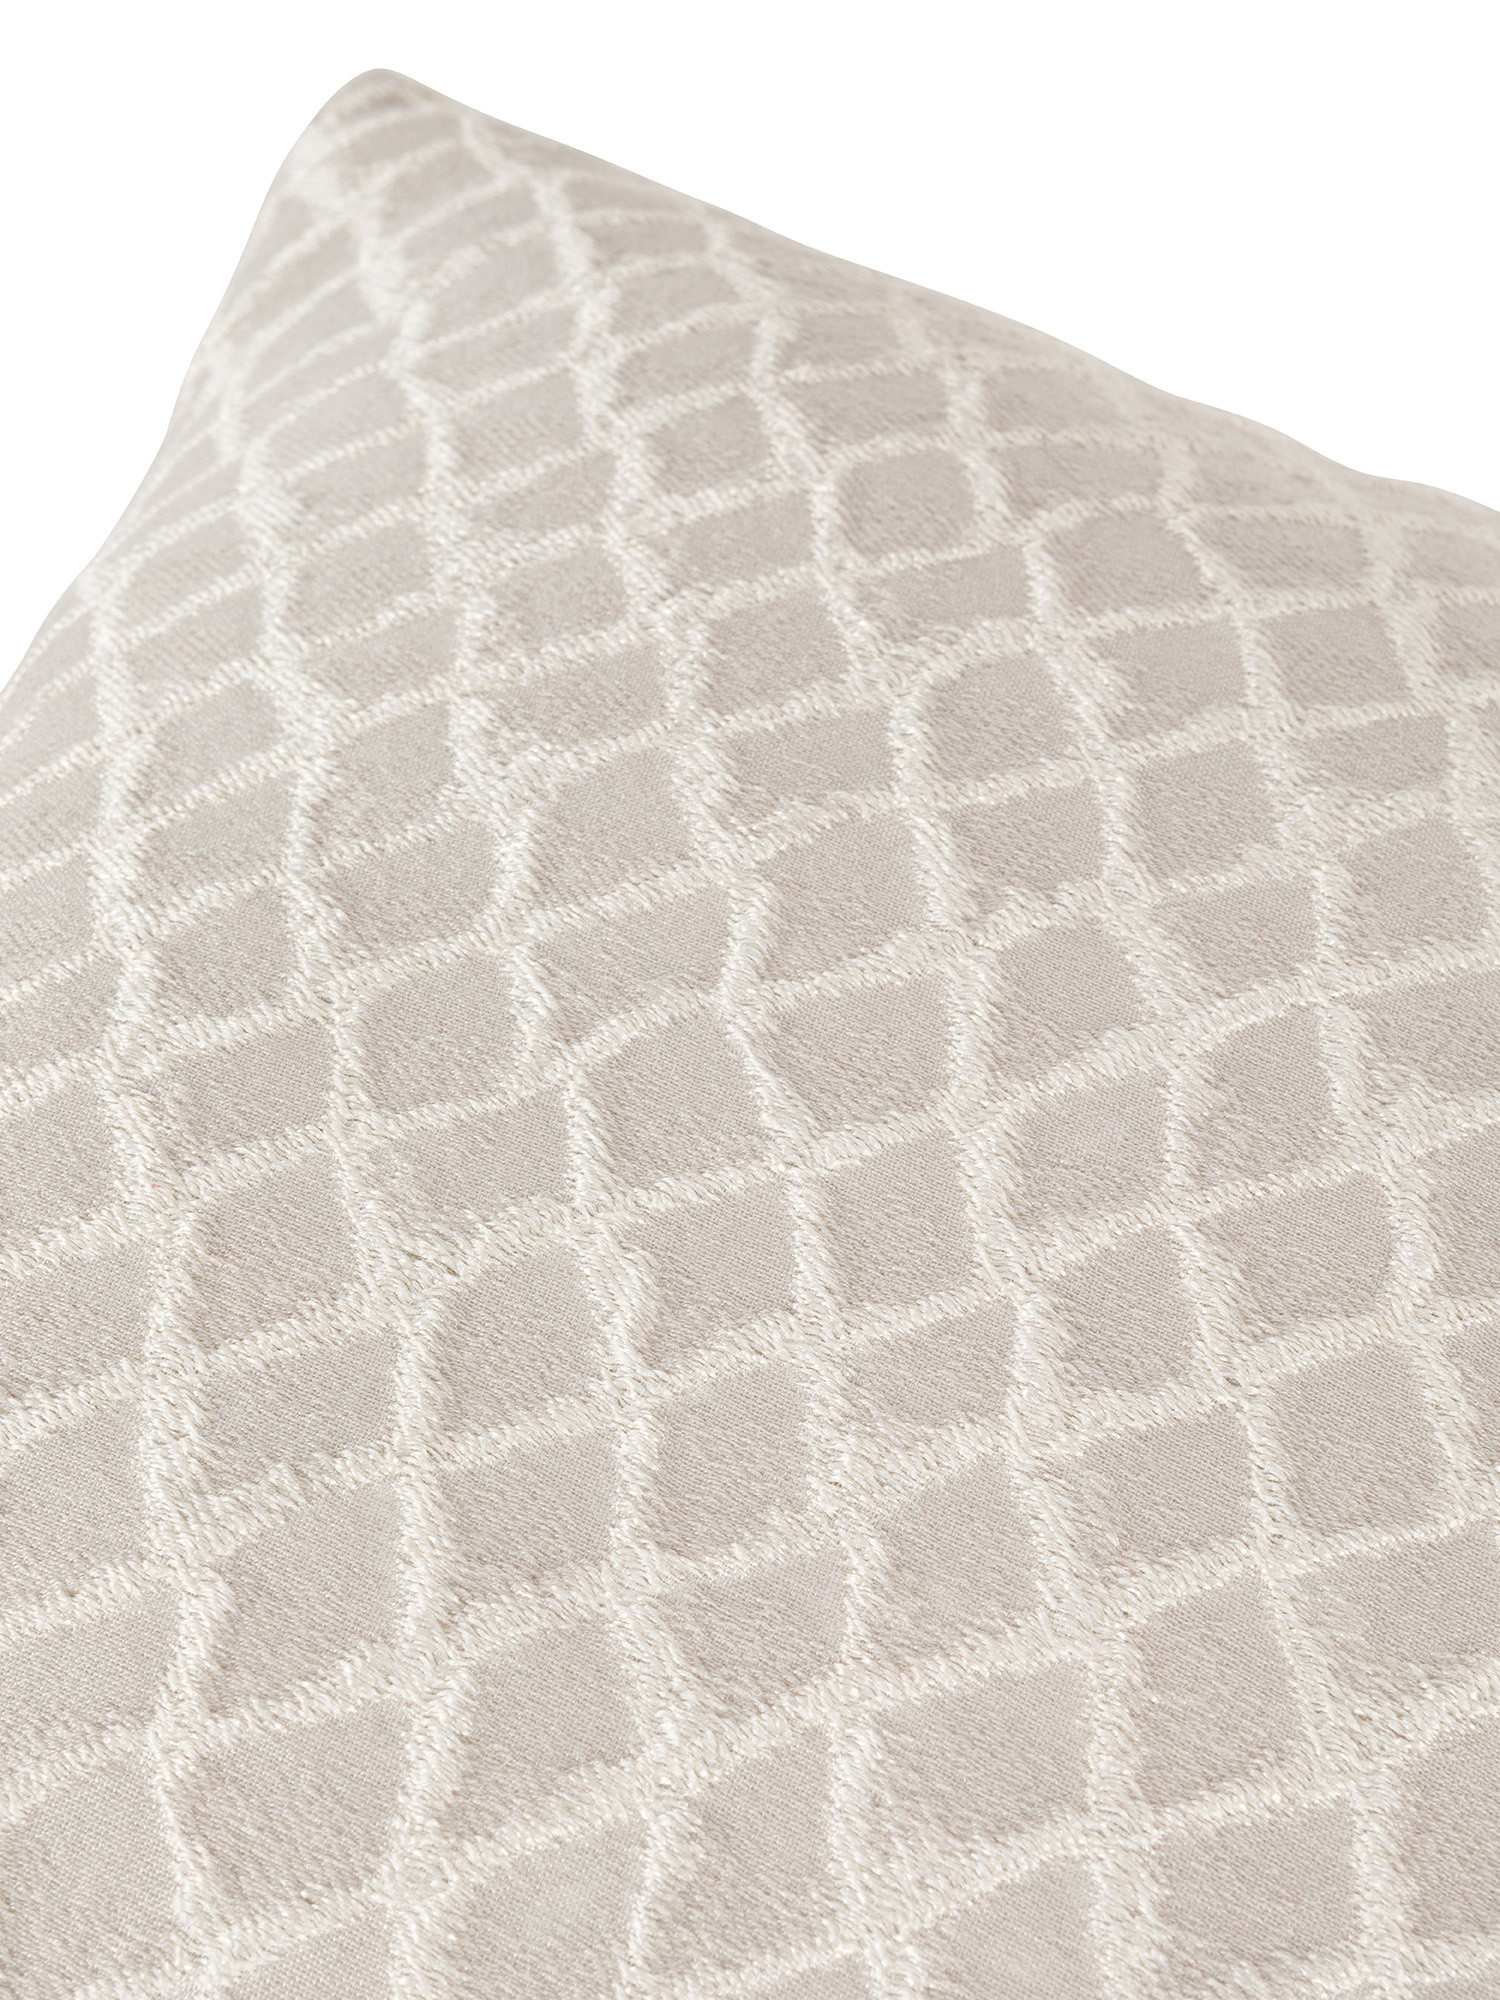 Cuscino in tessuto jacquard  motivo geometrico 45x45 cm, Grigio argento, large image number 2